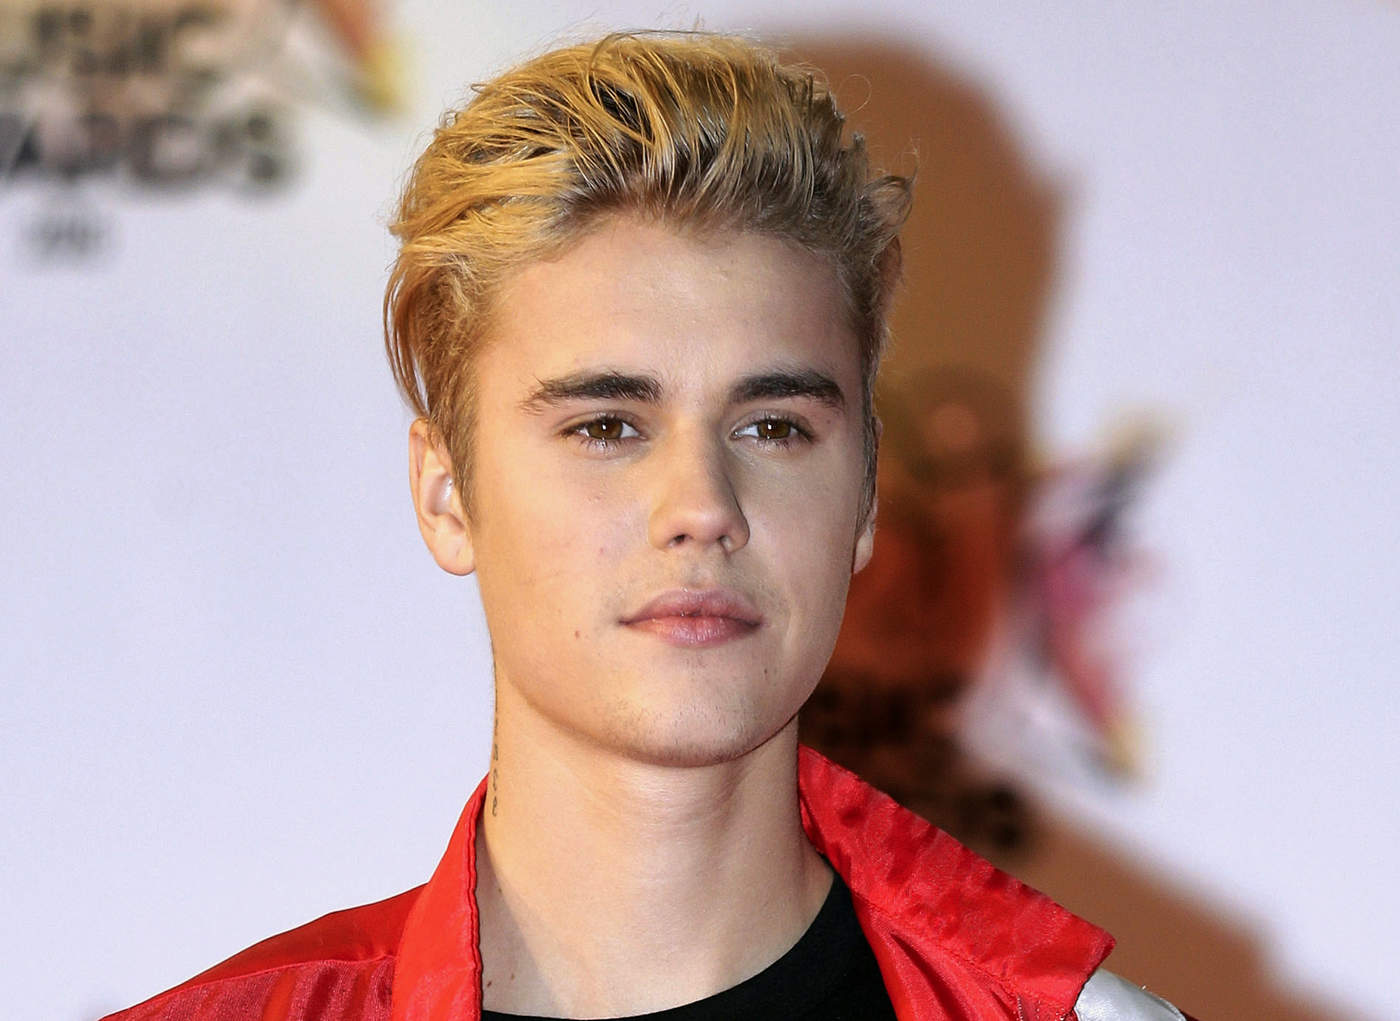 Nuevo tatuaje de Justin Bieber causa polémica en redes